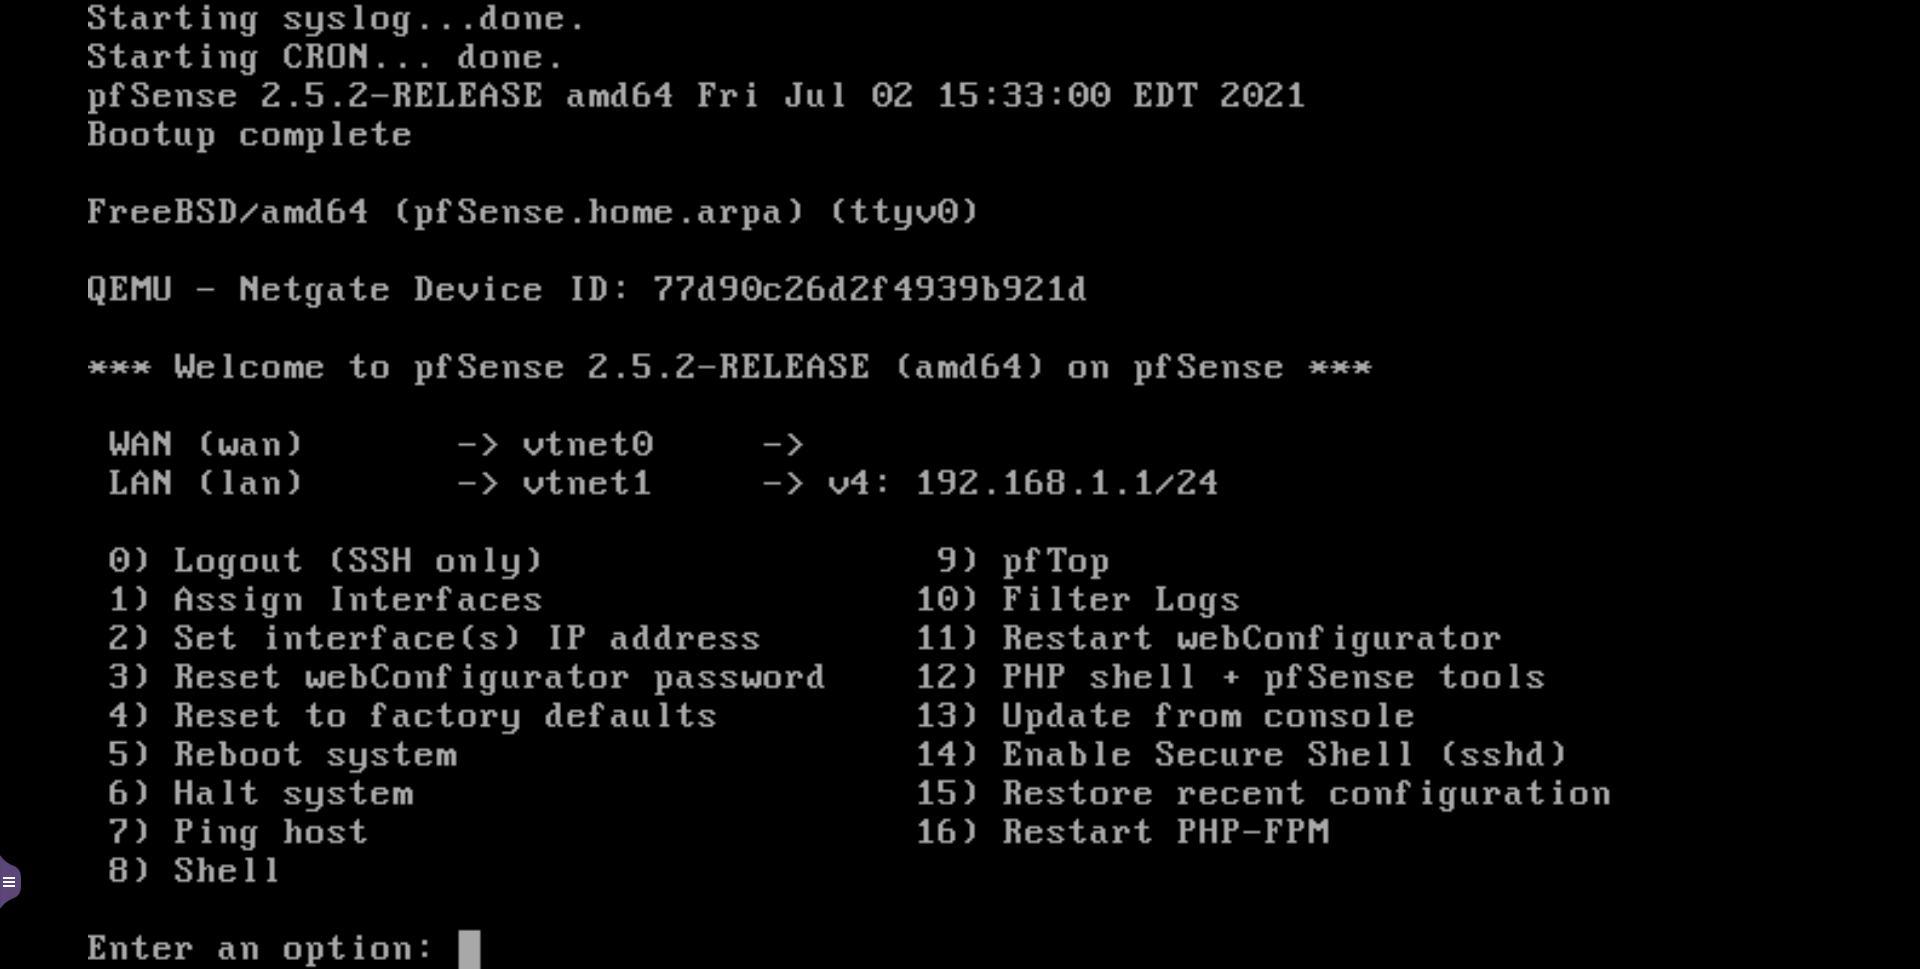 Configure QNAP NAS Server as Primary Router with pfSense